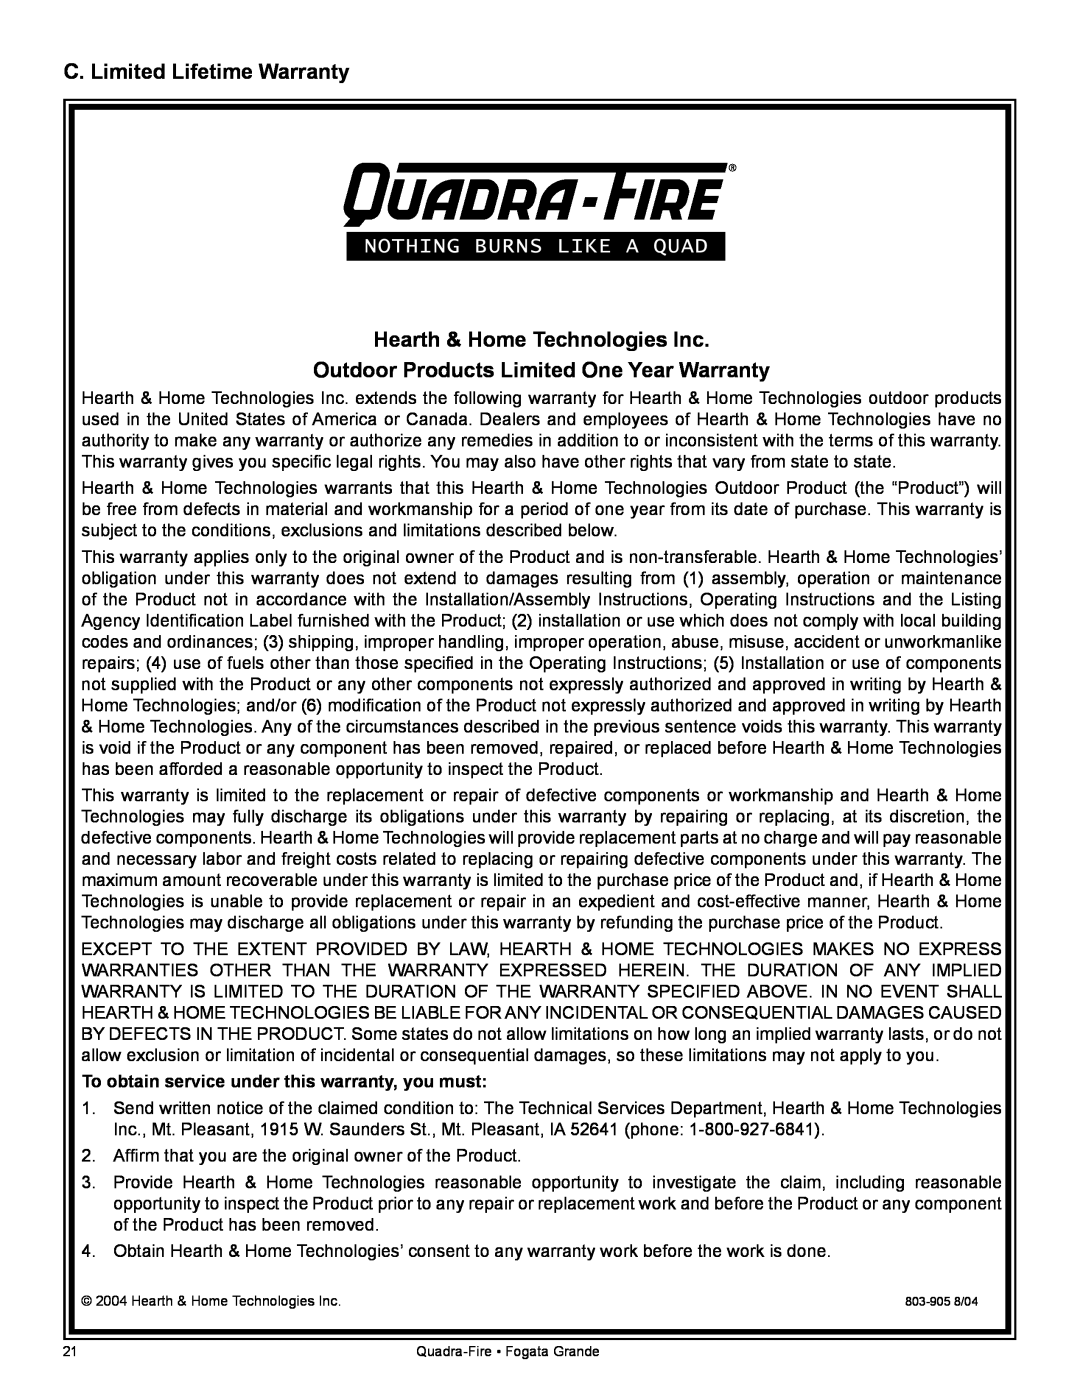 Quadra-Fire FG21SP-LP owner manual C. Limited Lifetime Warranty, Hearth & Home Technologies Inc 